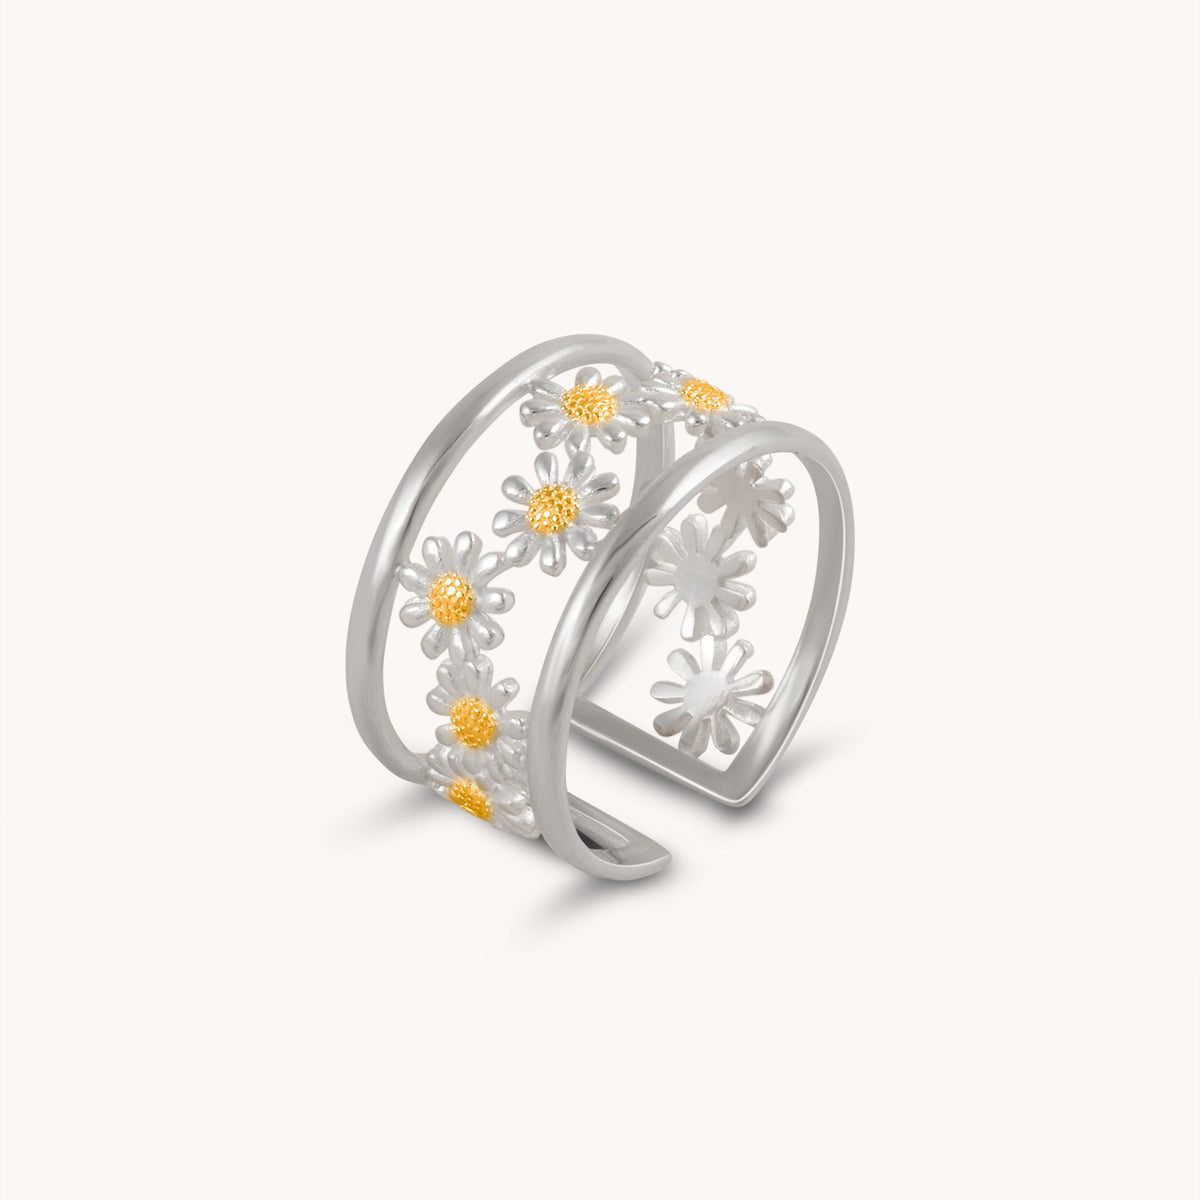 Daisy Silver Adjustable Ring